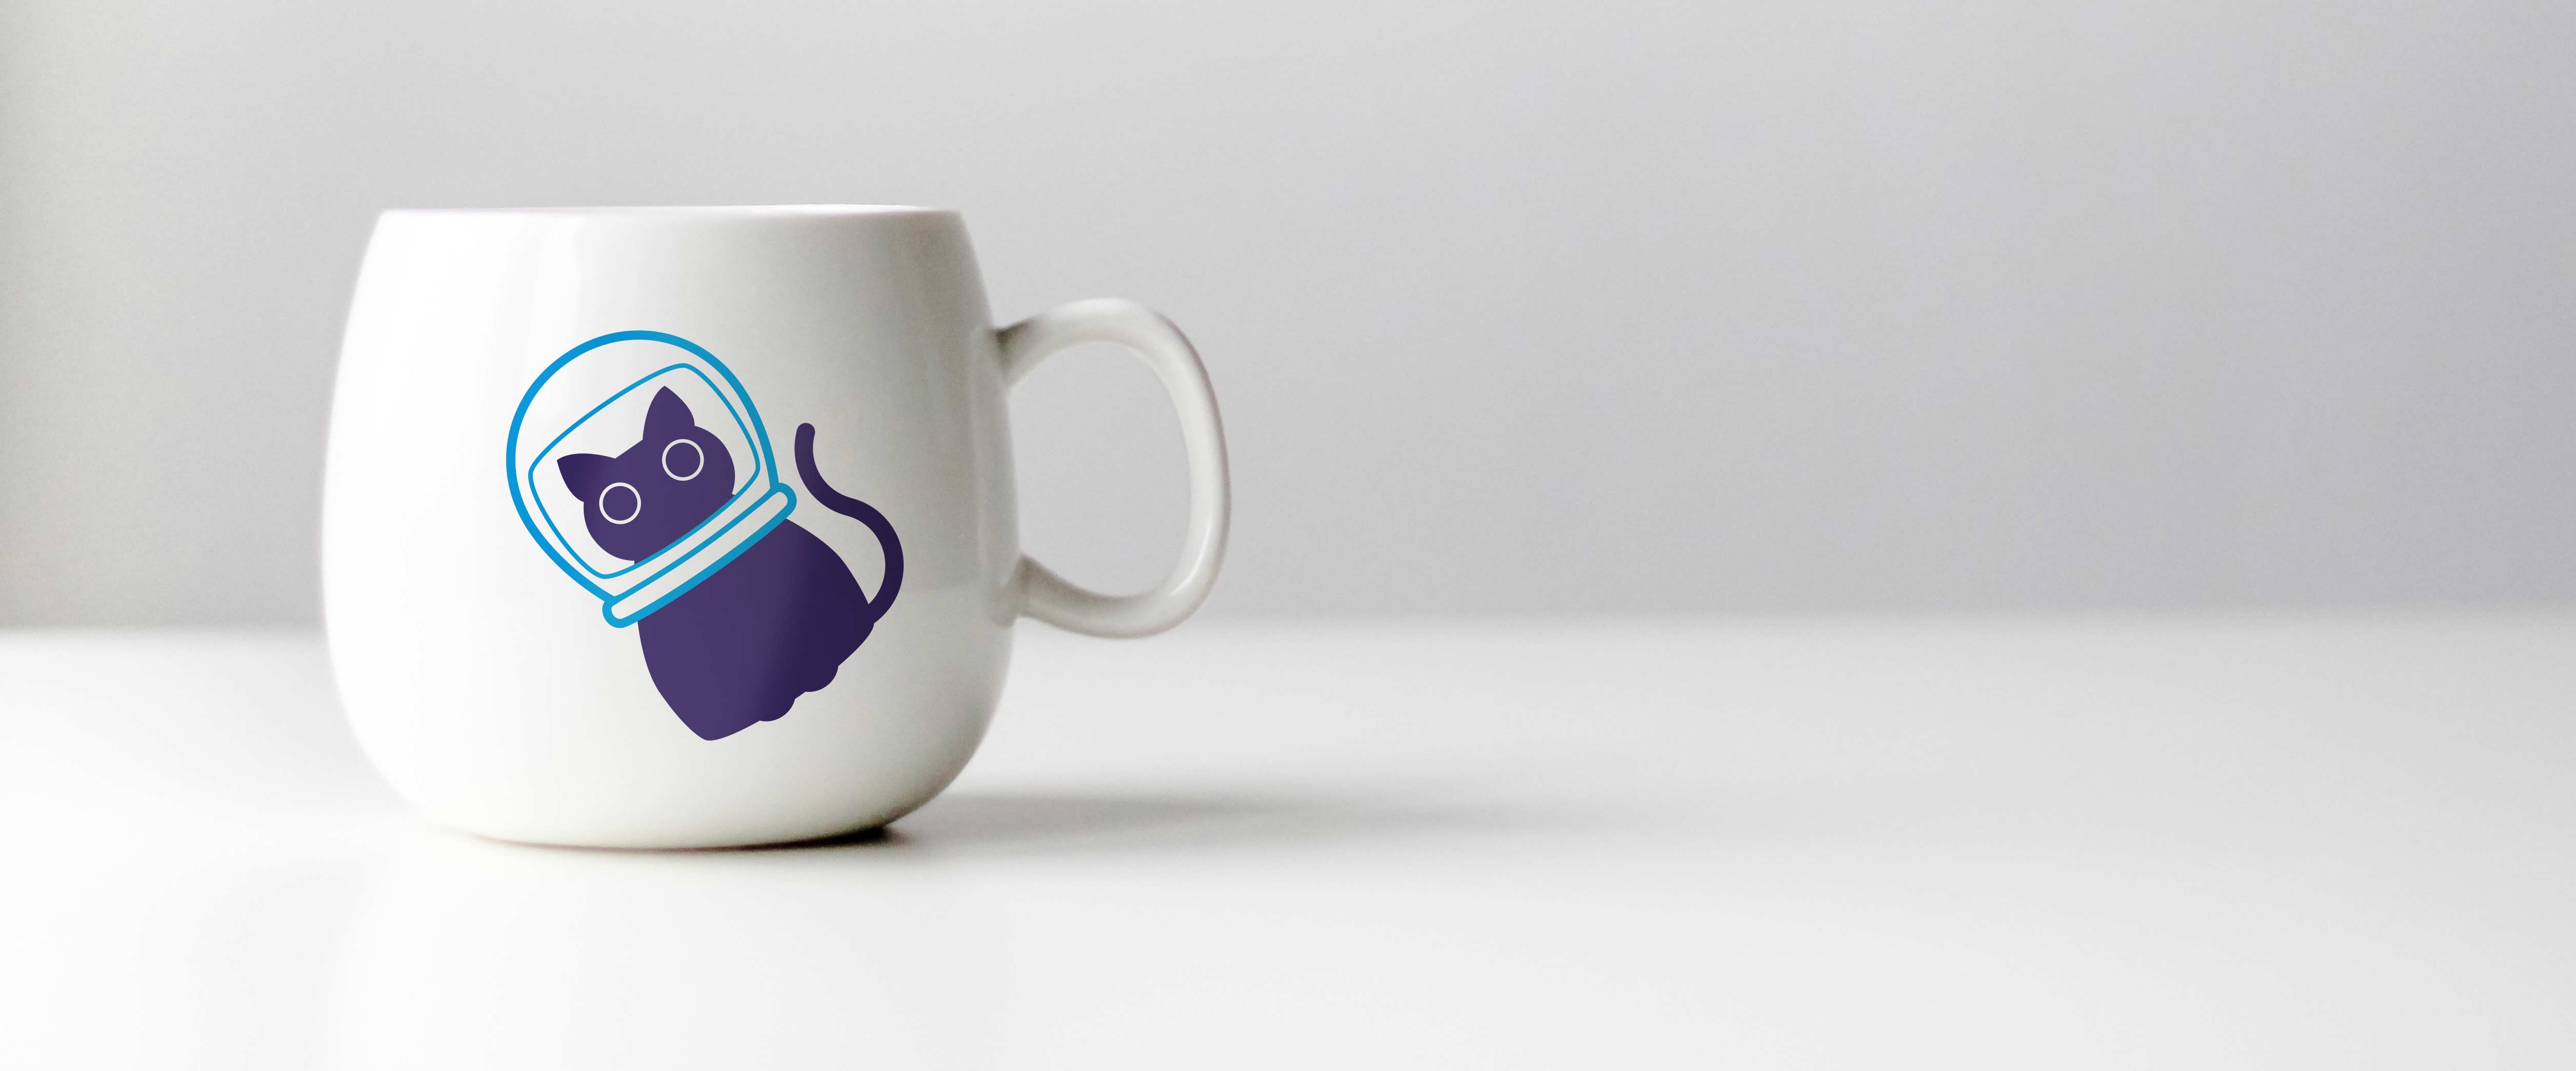 This is an image of the new Catonaut ceramic mug